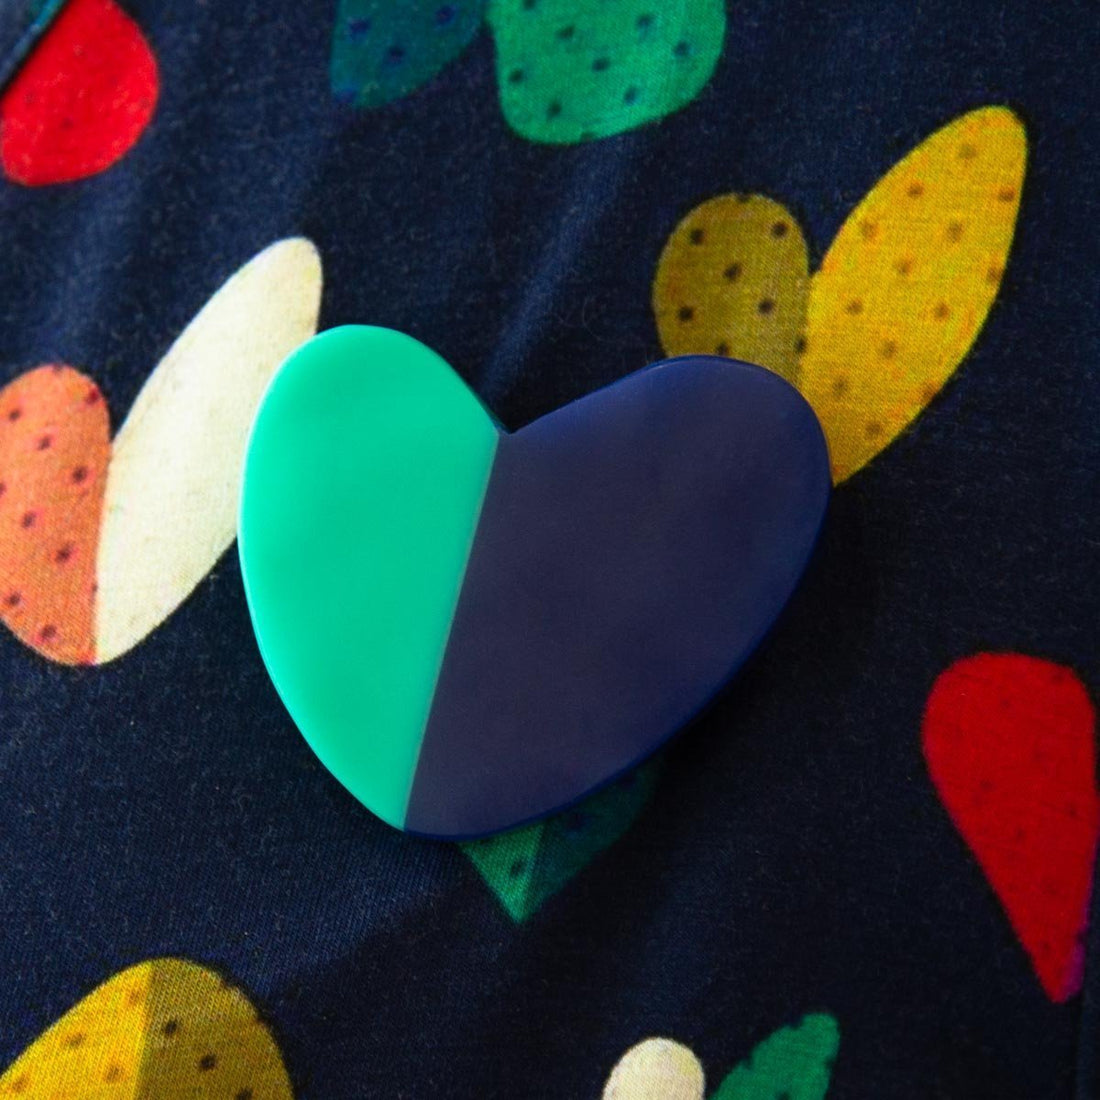 Aqua and navy heart shaped brooch on heart background.